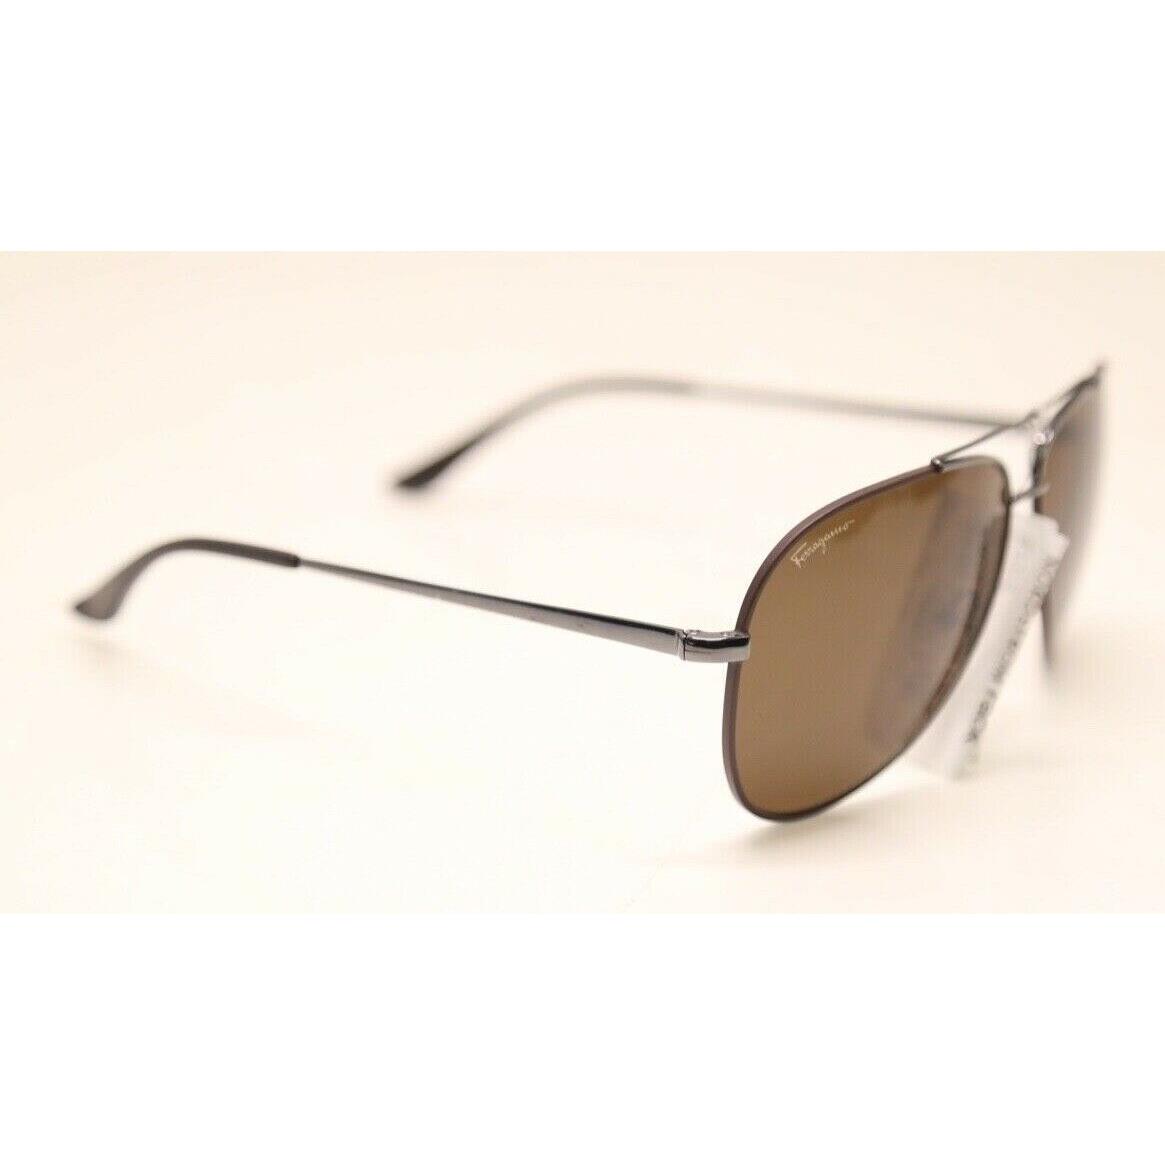 Salvatore Ferragamo sunglasses  - Shiny Gunmetal Frame, Cocoa Lens 0